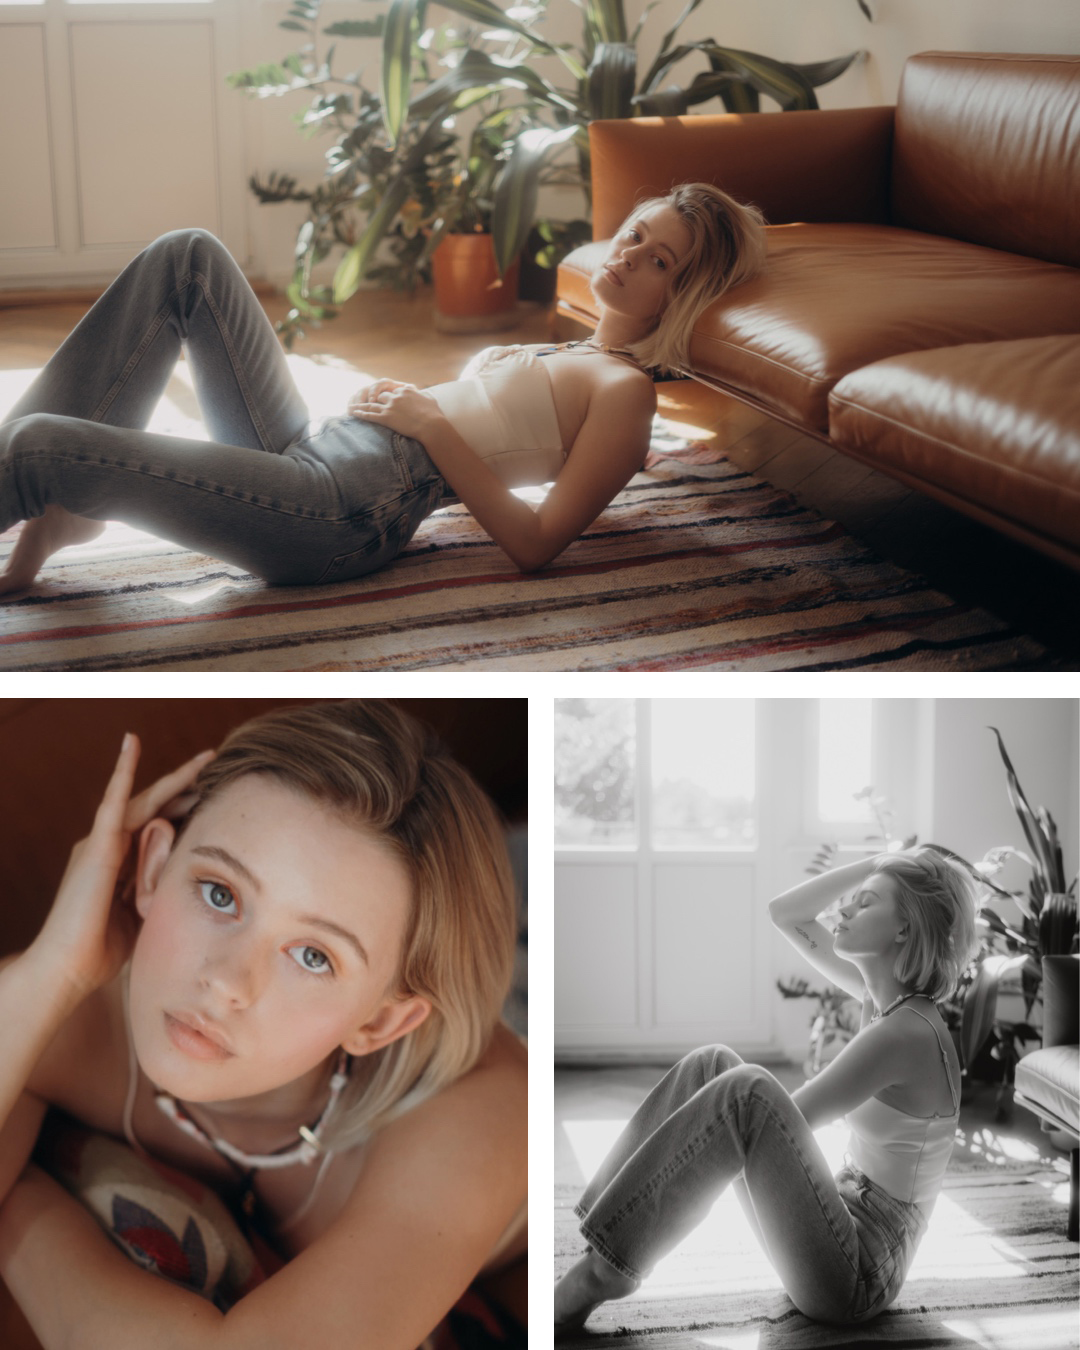 Beautyshooting – Model: Anna Dora Photography: Luise Blumstengel Styling/ Make-up : Uta Stabler